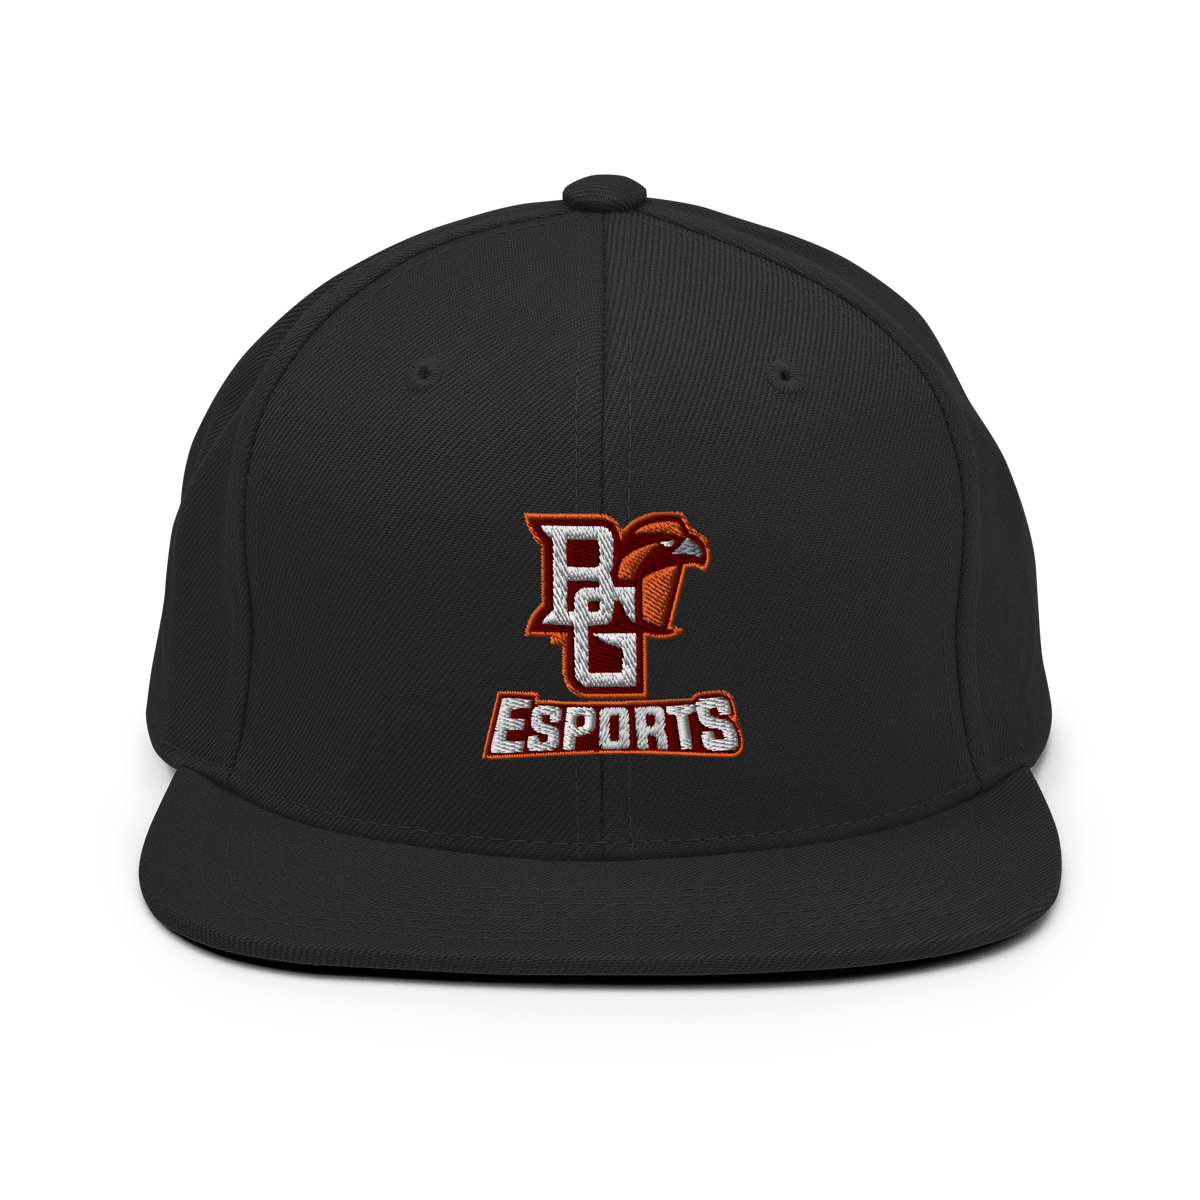 BGSU Esports | On Demand | Embroidered Snapback Hat